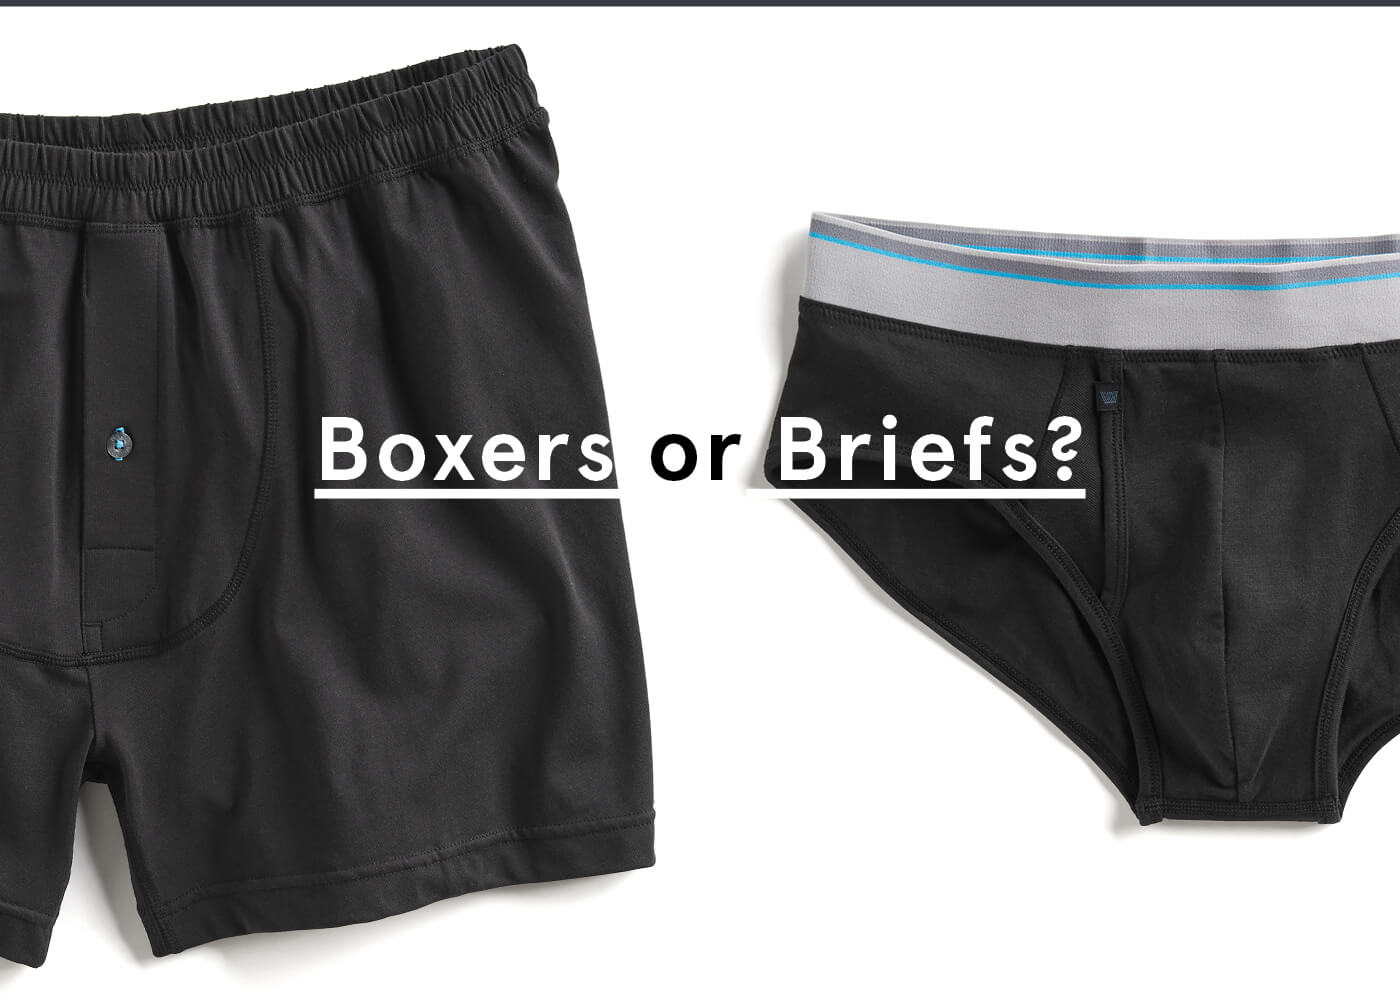 The underwear expert asks: Boxers or Briefs